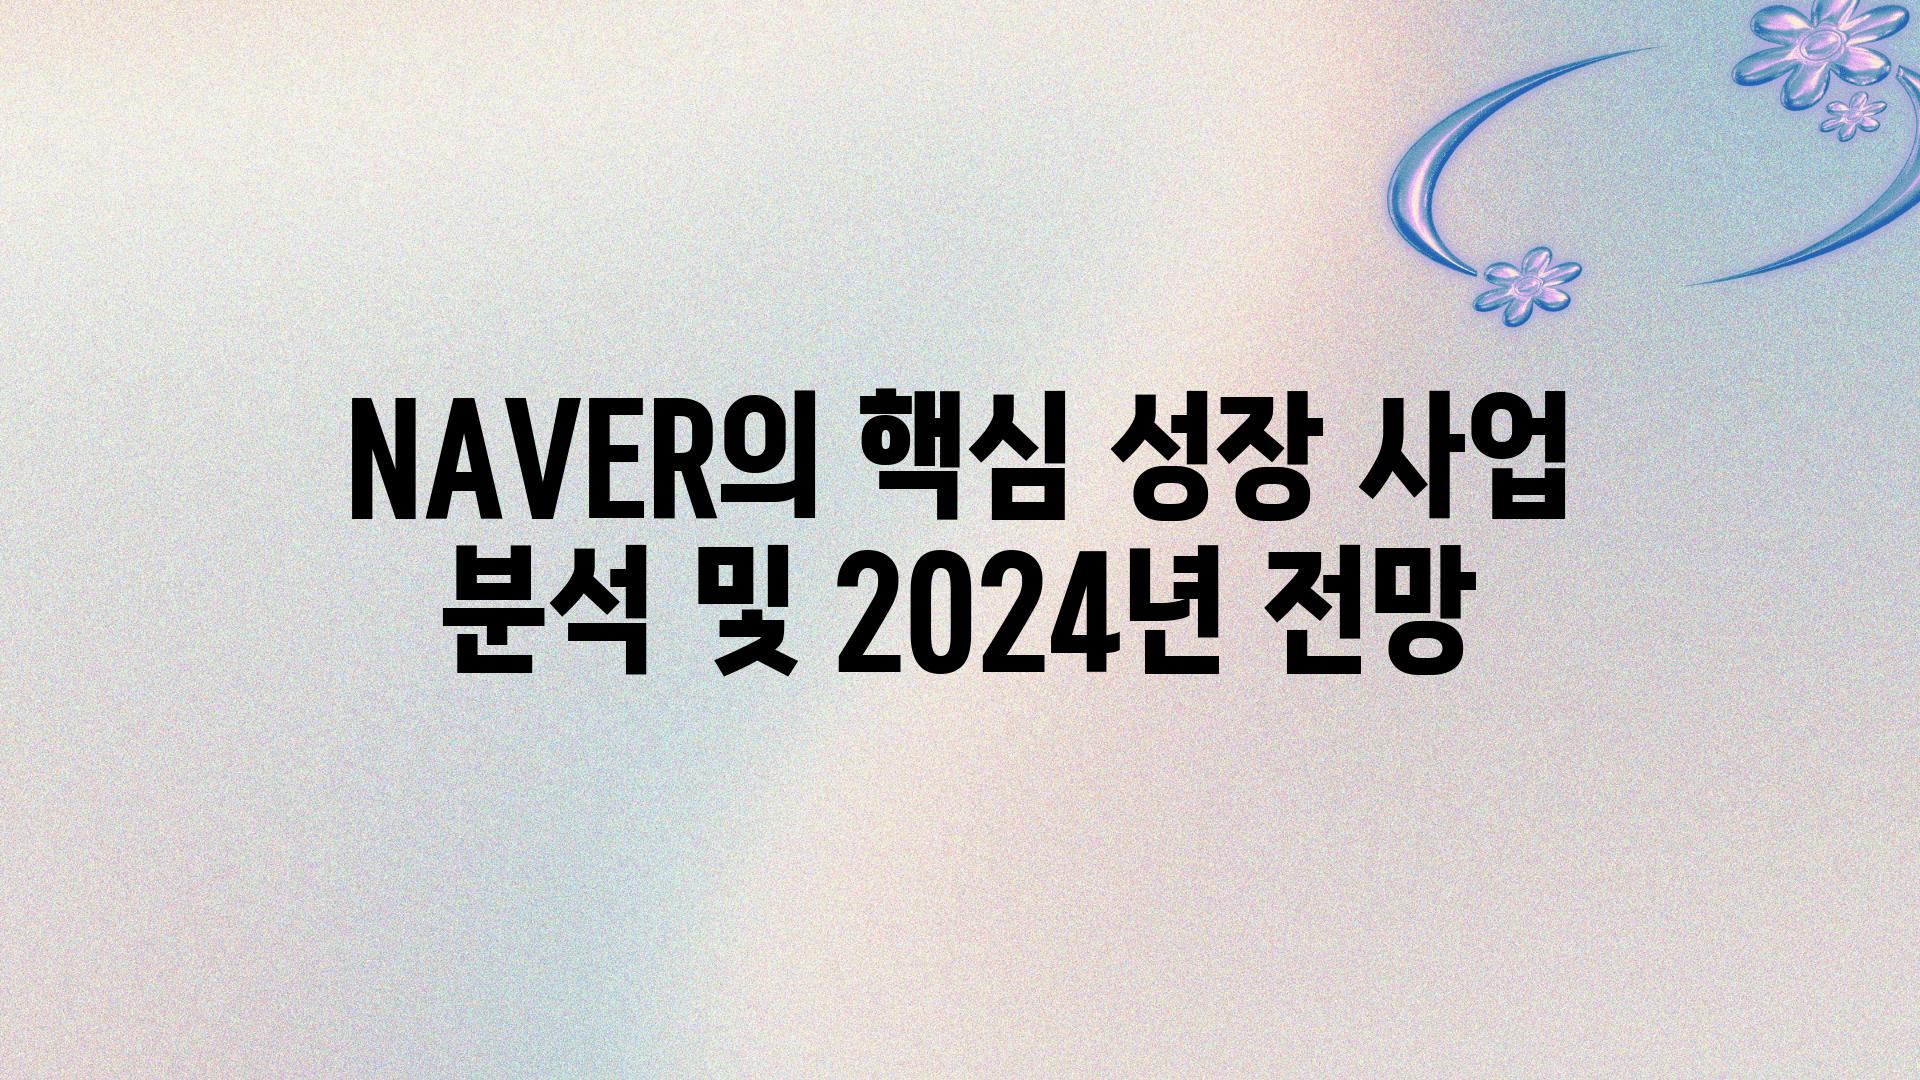 NAVER의 핵심 성장 사업 분석 및 2024년 전망